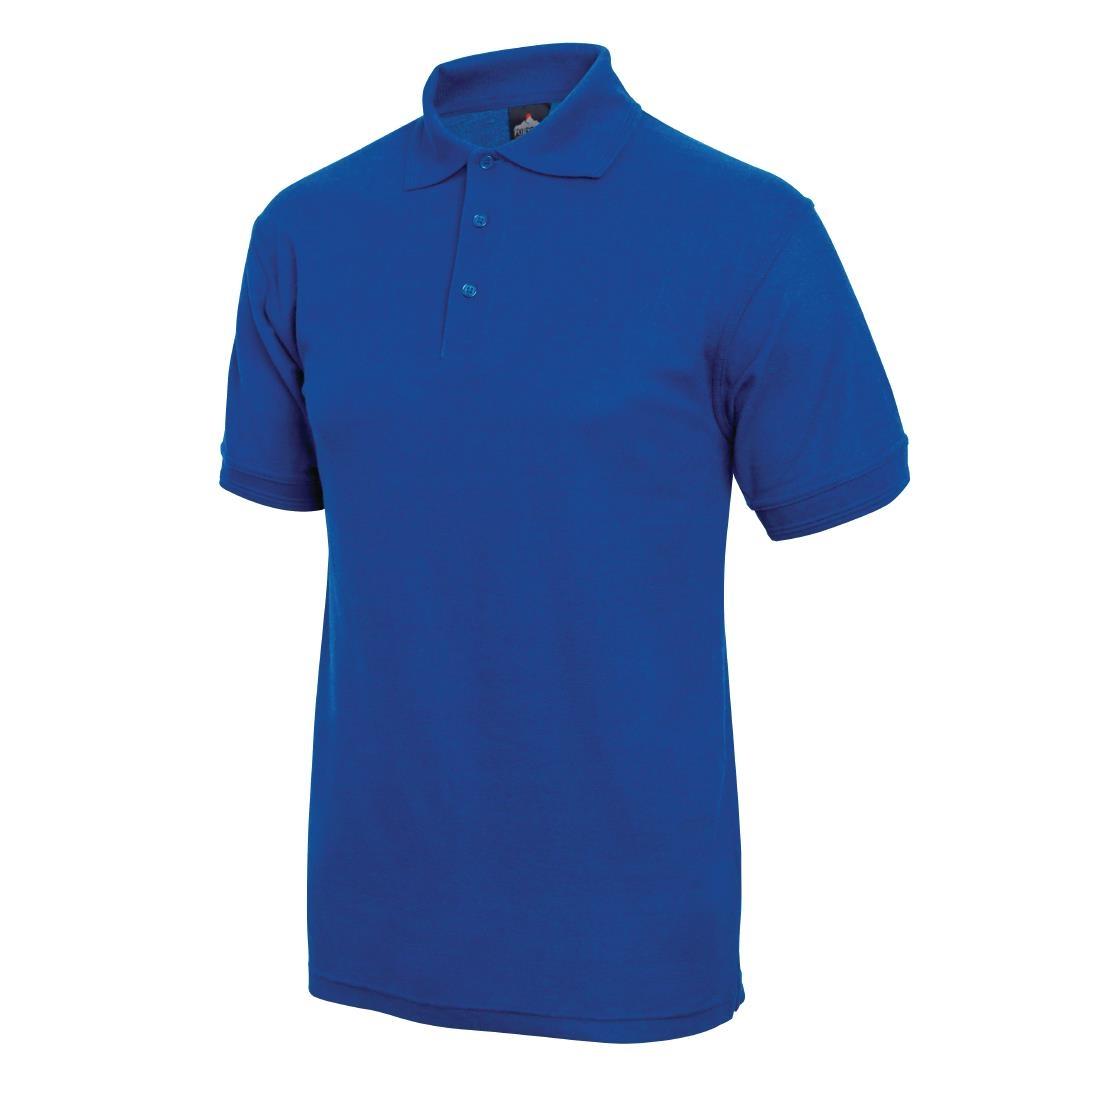 Unisex Polo Shirt Royal Blue XL - A763-XL  - 2